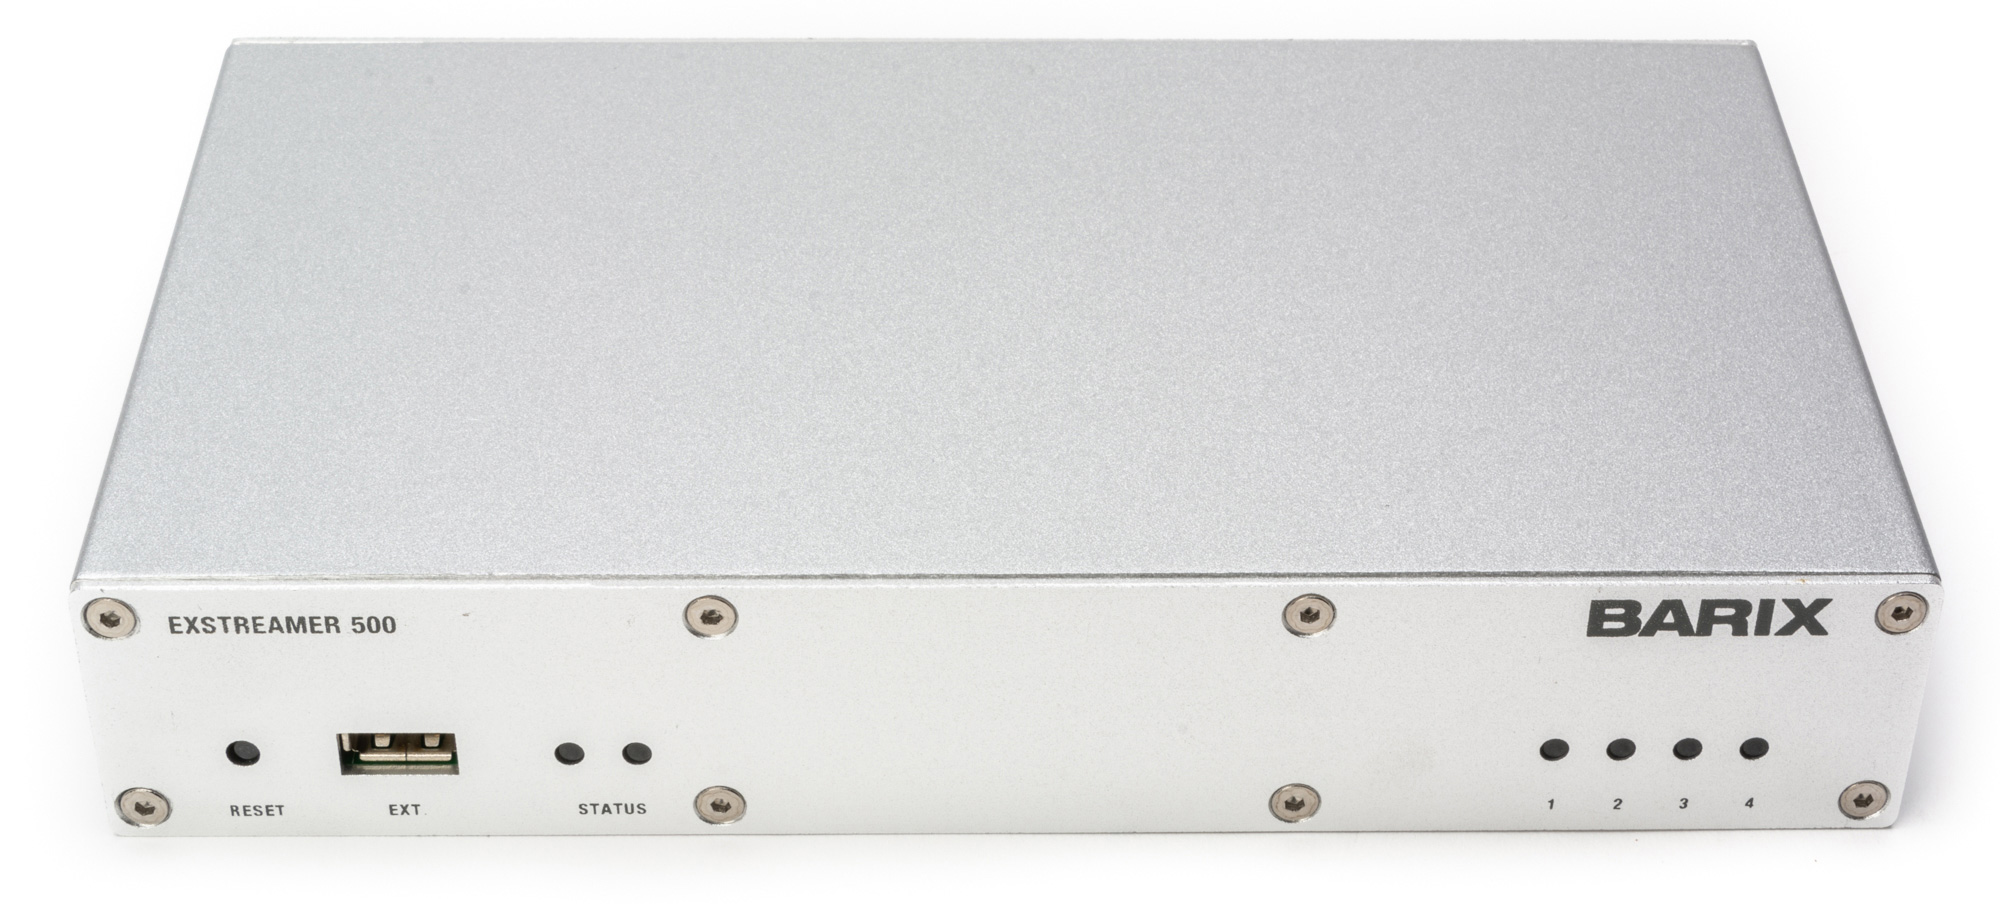 Barix Exstreamer 500 Professional Mulitprotocol IP Audio de-/encoder B